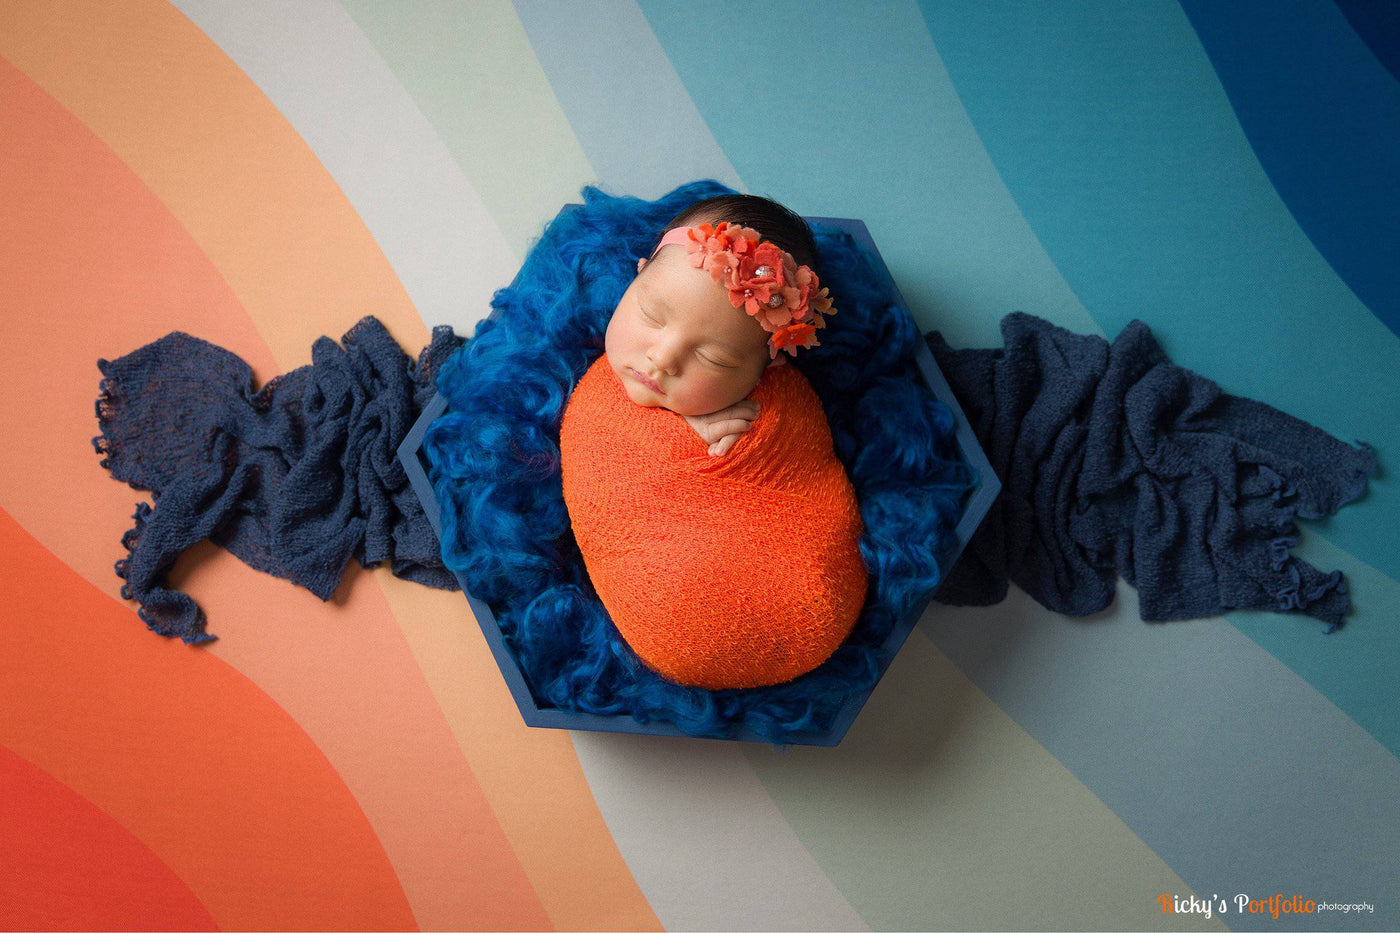 Orange Stretch Knit Baby Wrap - Beautiful Photo Props